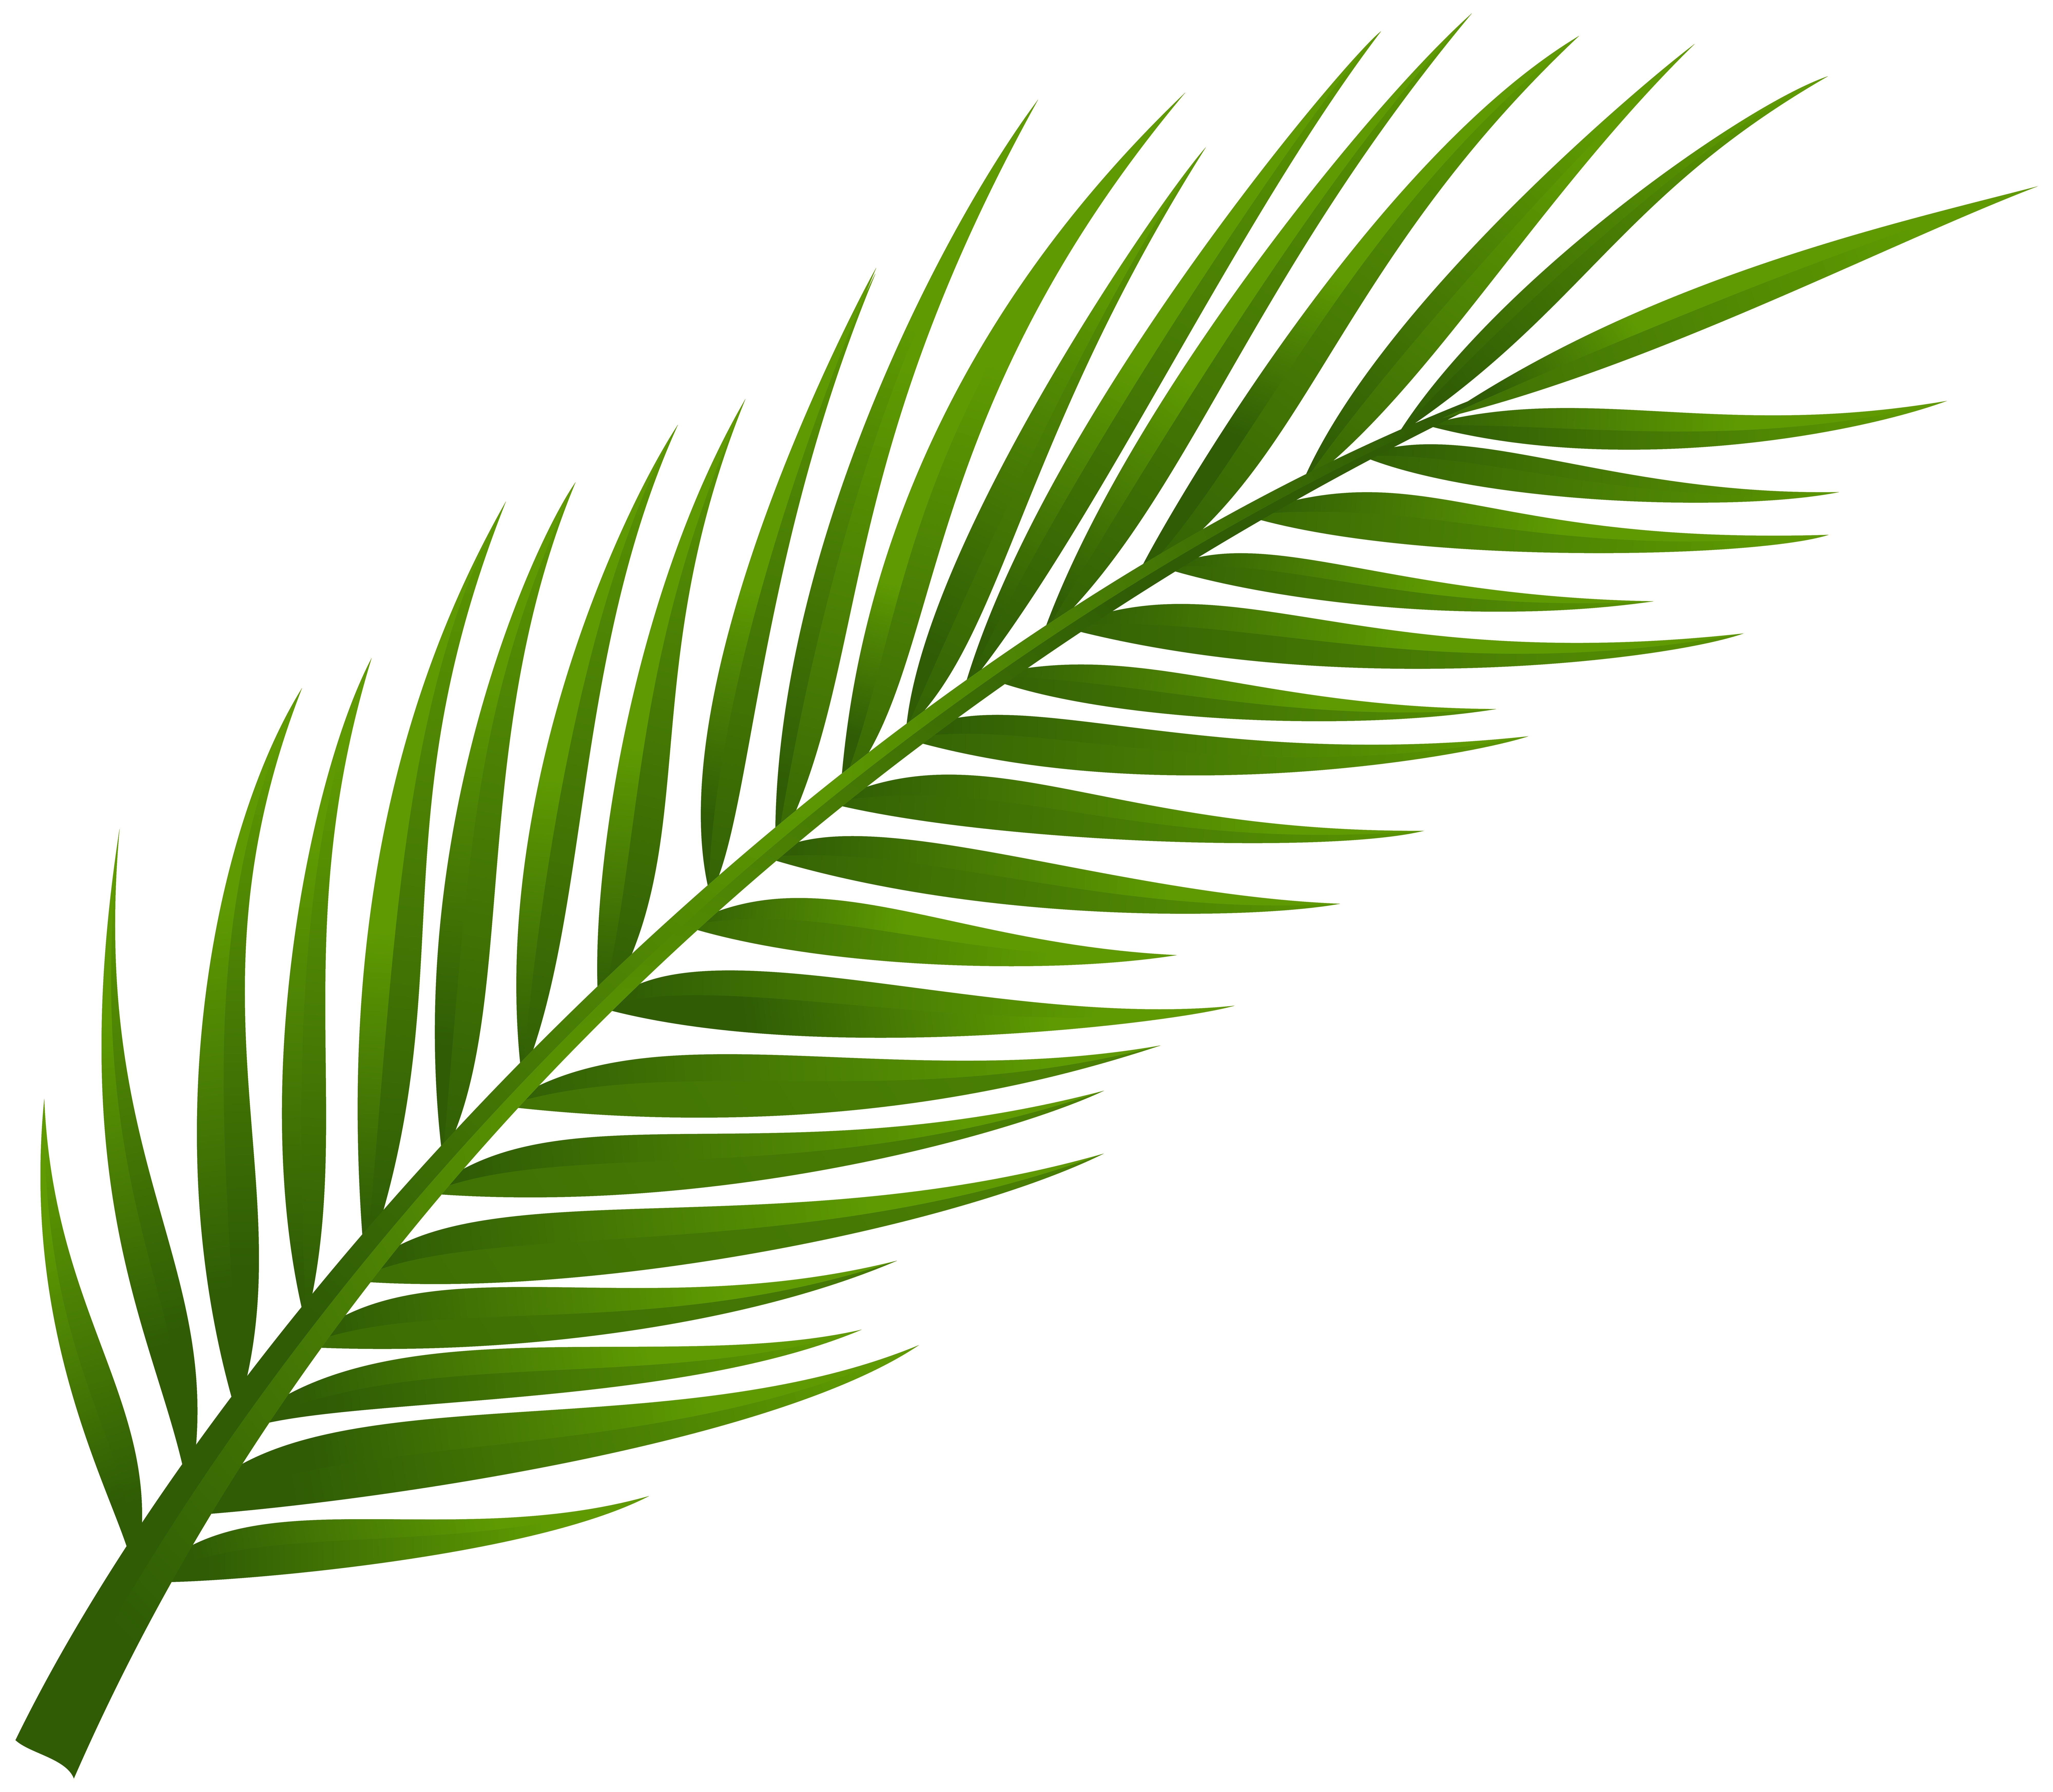 tropical leaf clip art